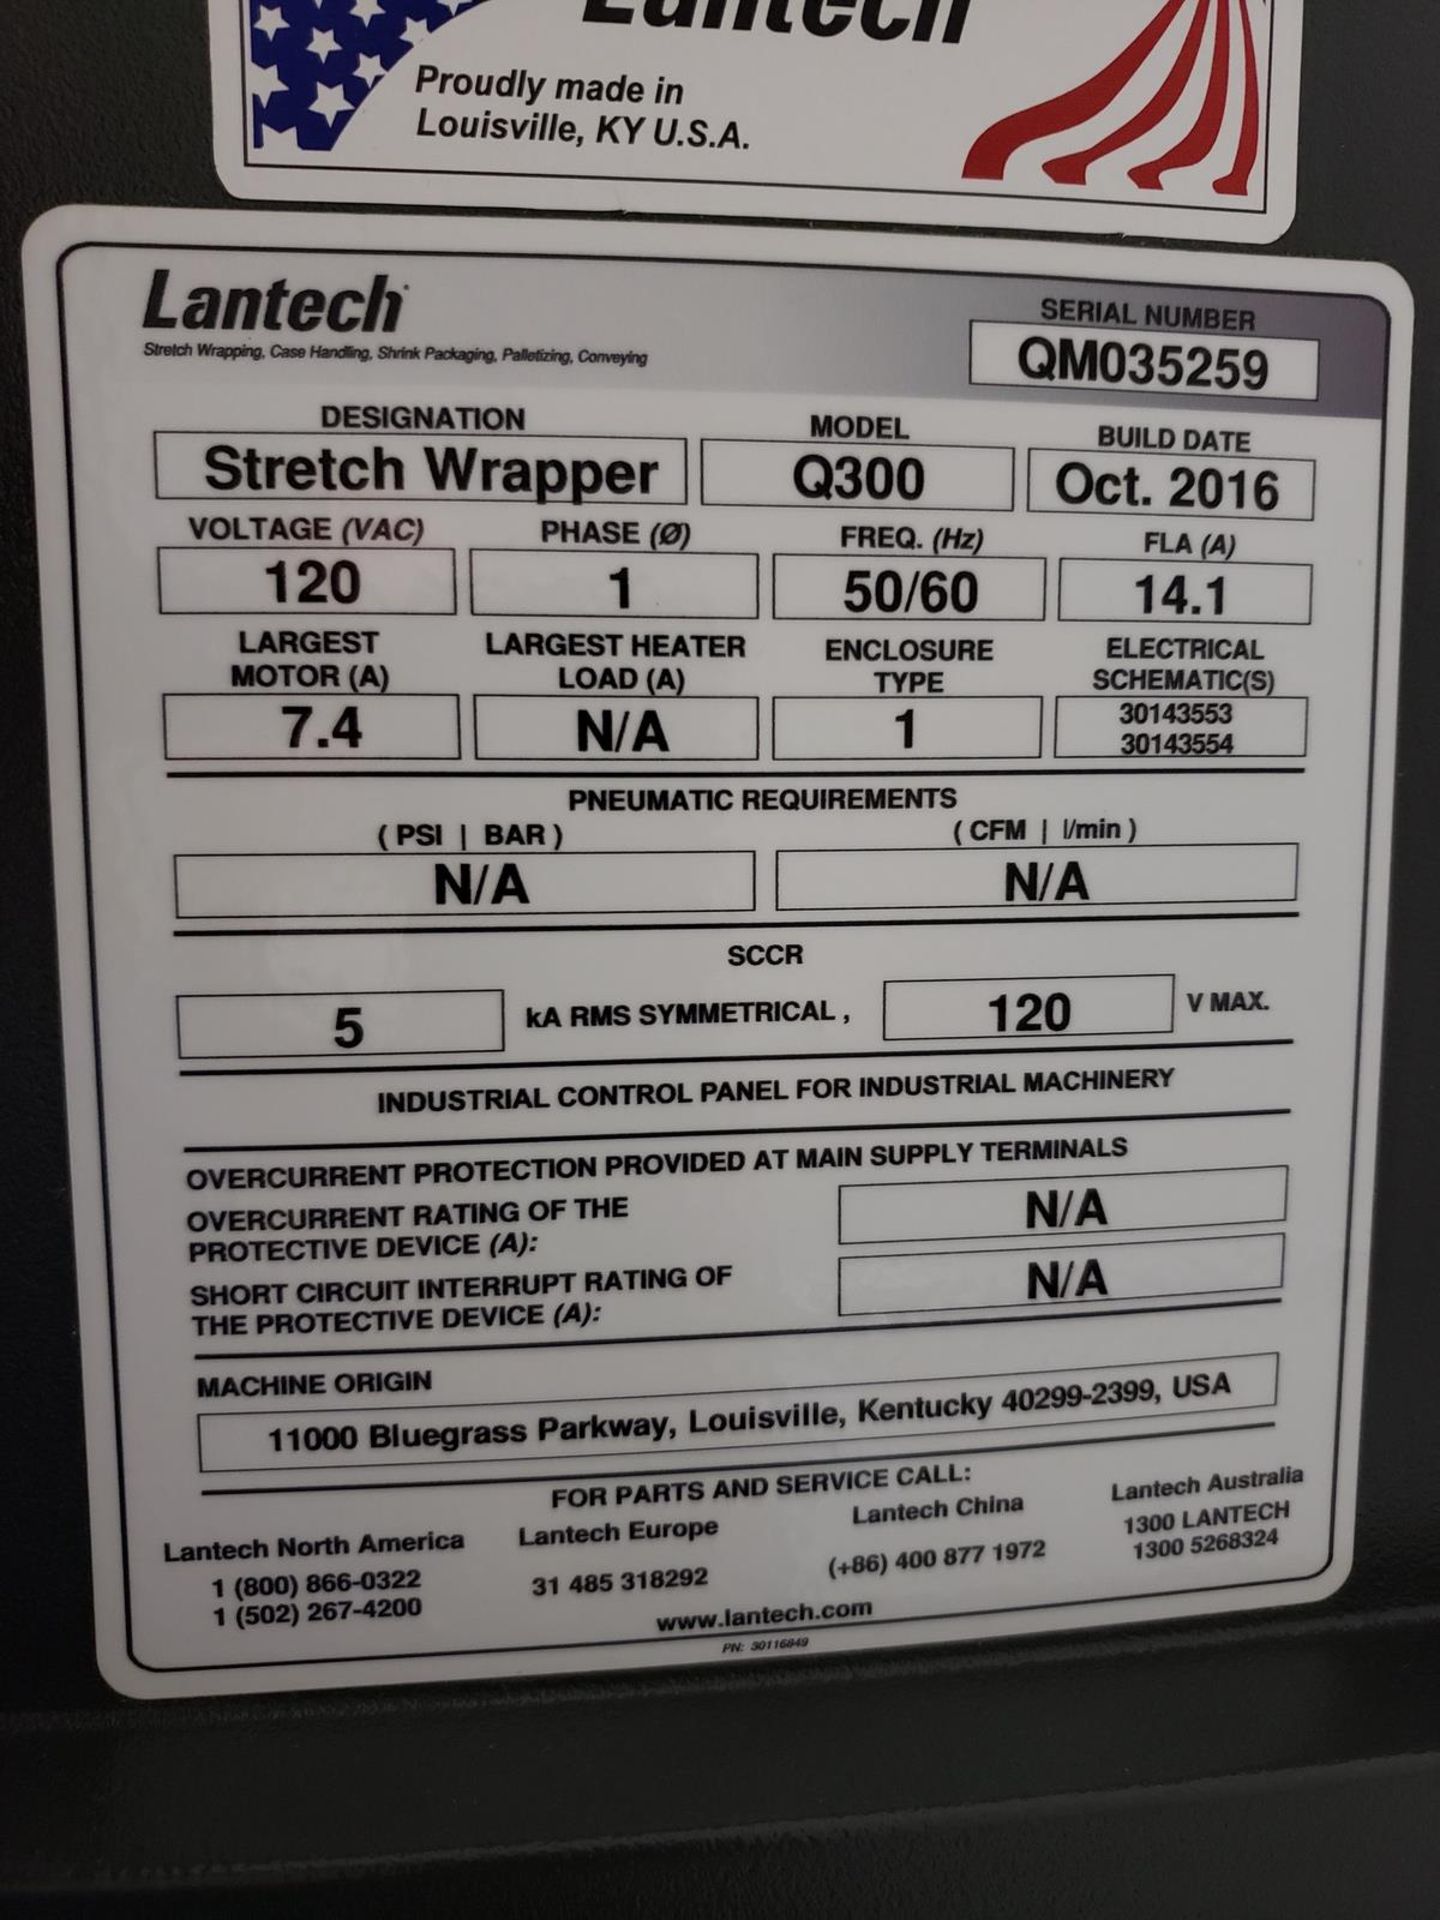 Lantech Stretch Wrapping Machine, M# Q300, S/N QM035259 | Rig Fee: $350 - Image 2 of 3